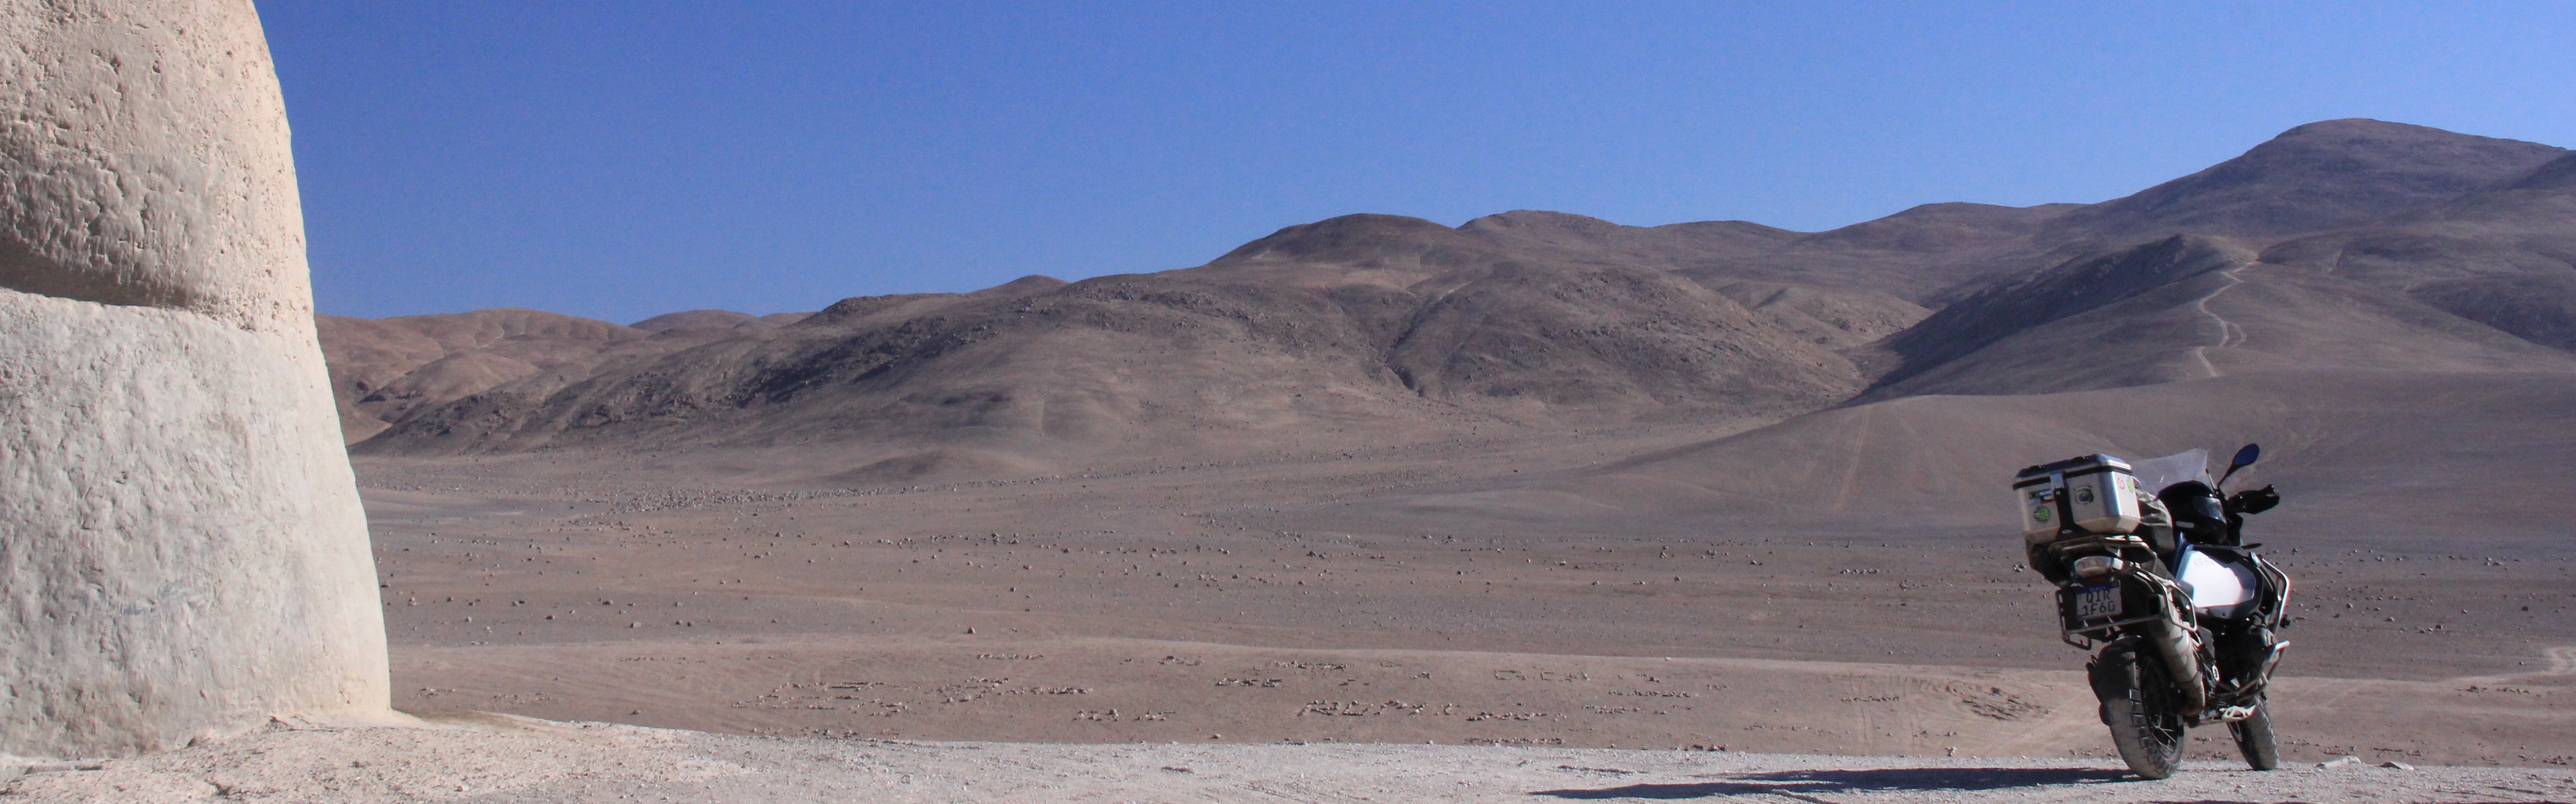 La Mano del Desierto e Atacama, Chile